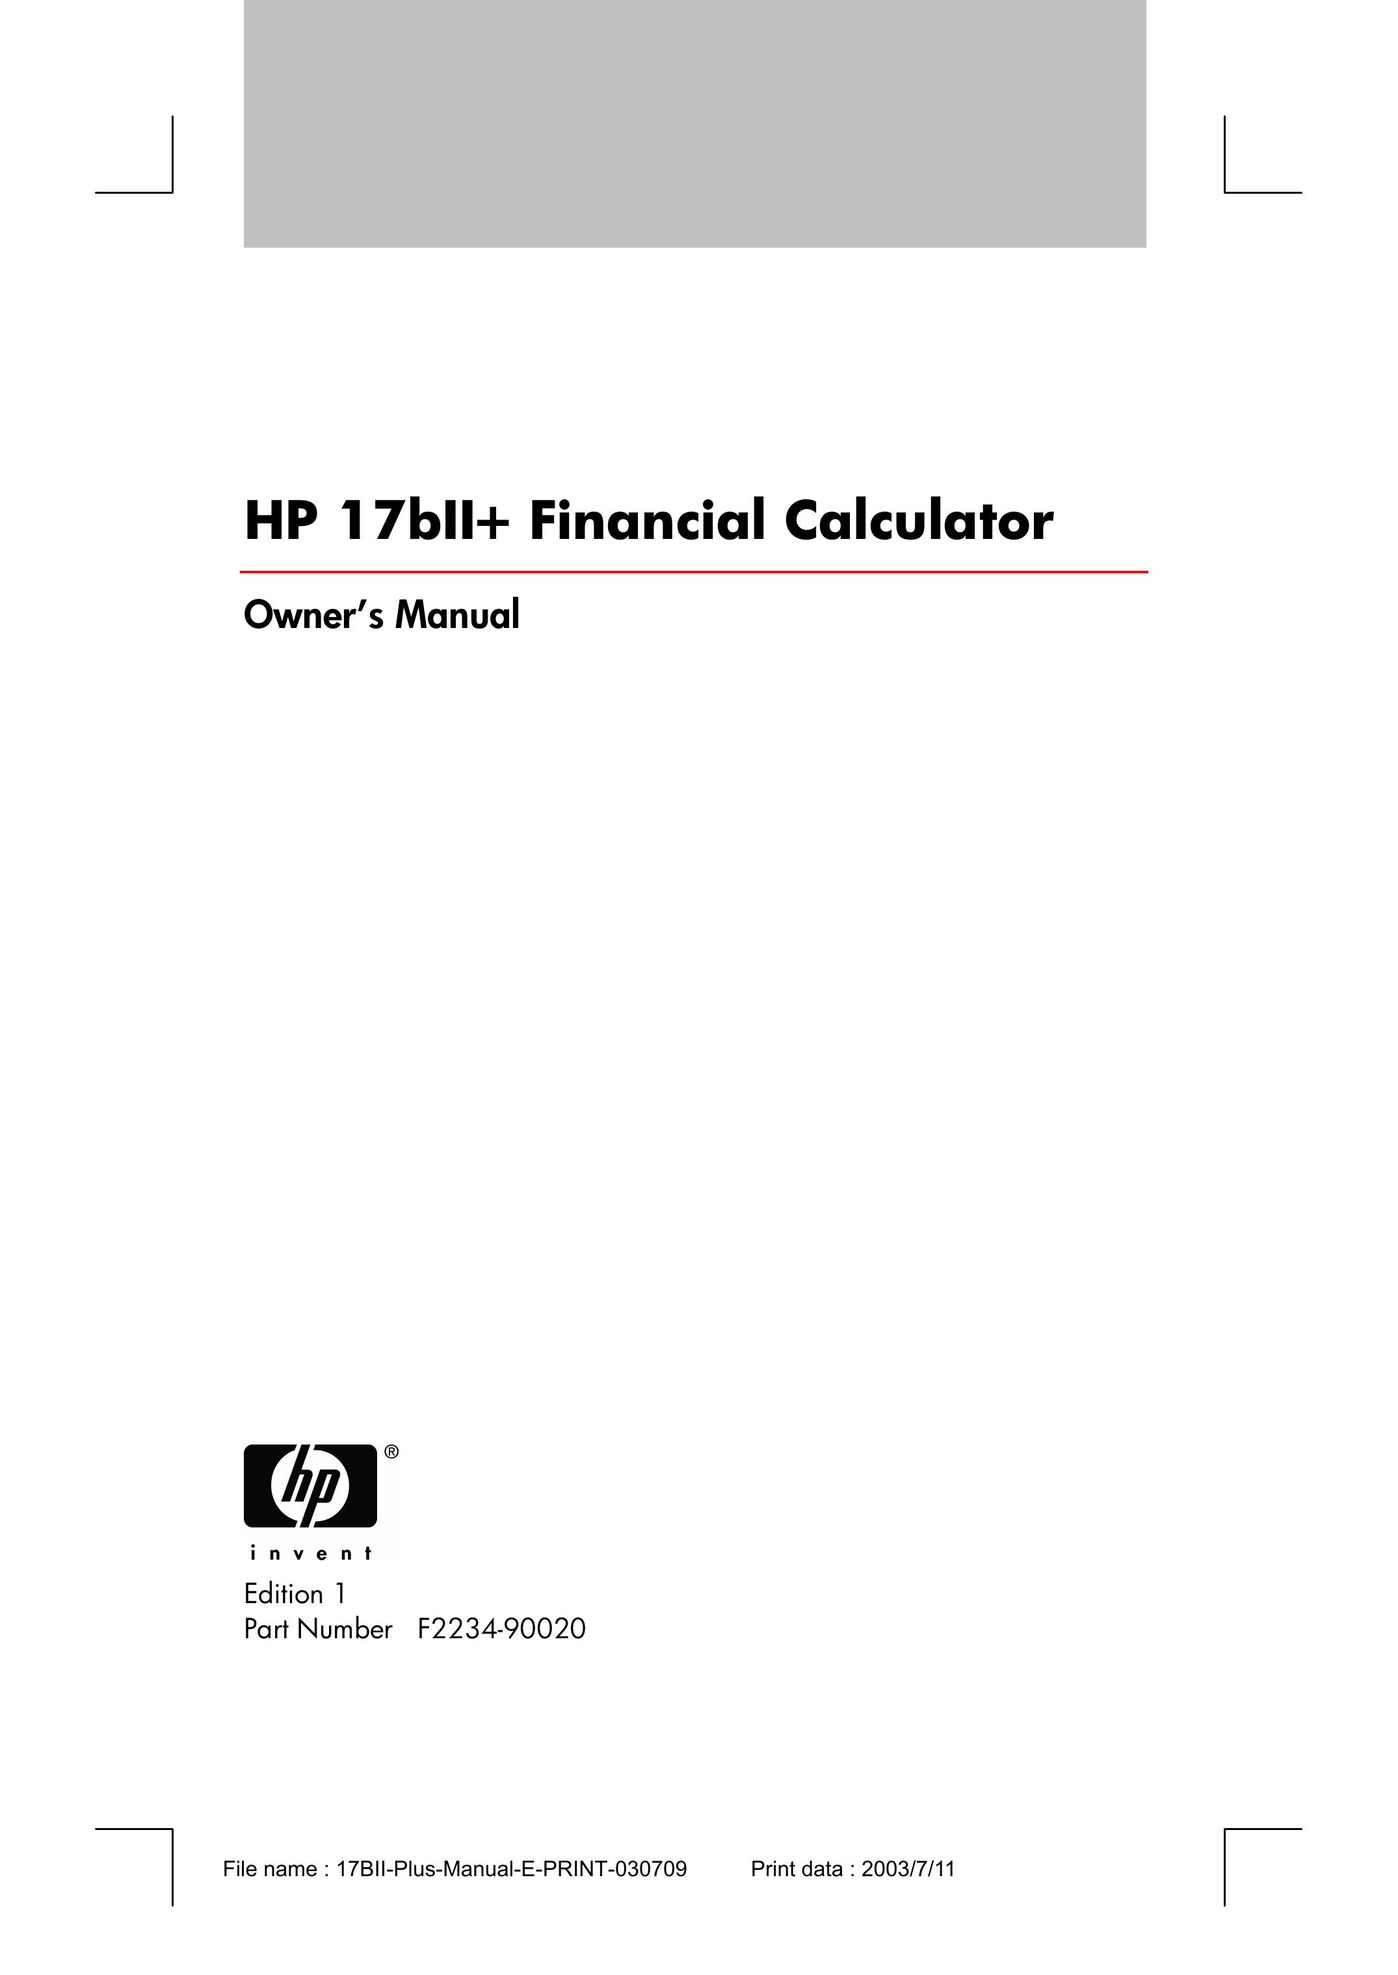 HP (Hewlett-Packard) HP 17bII+ Calculator User Manual